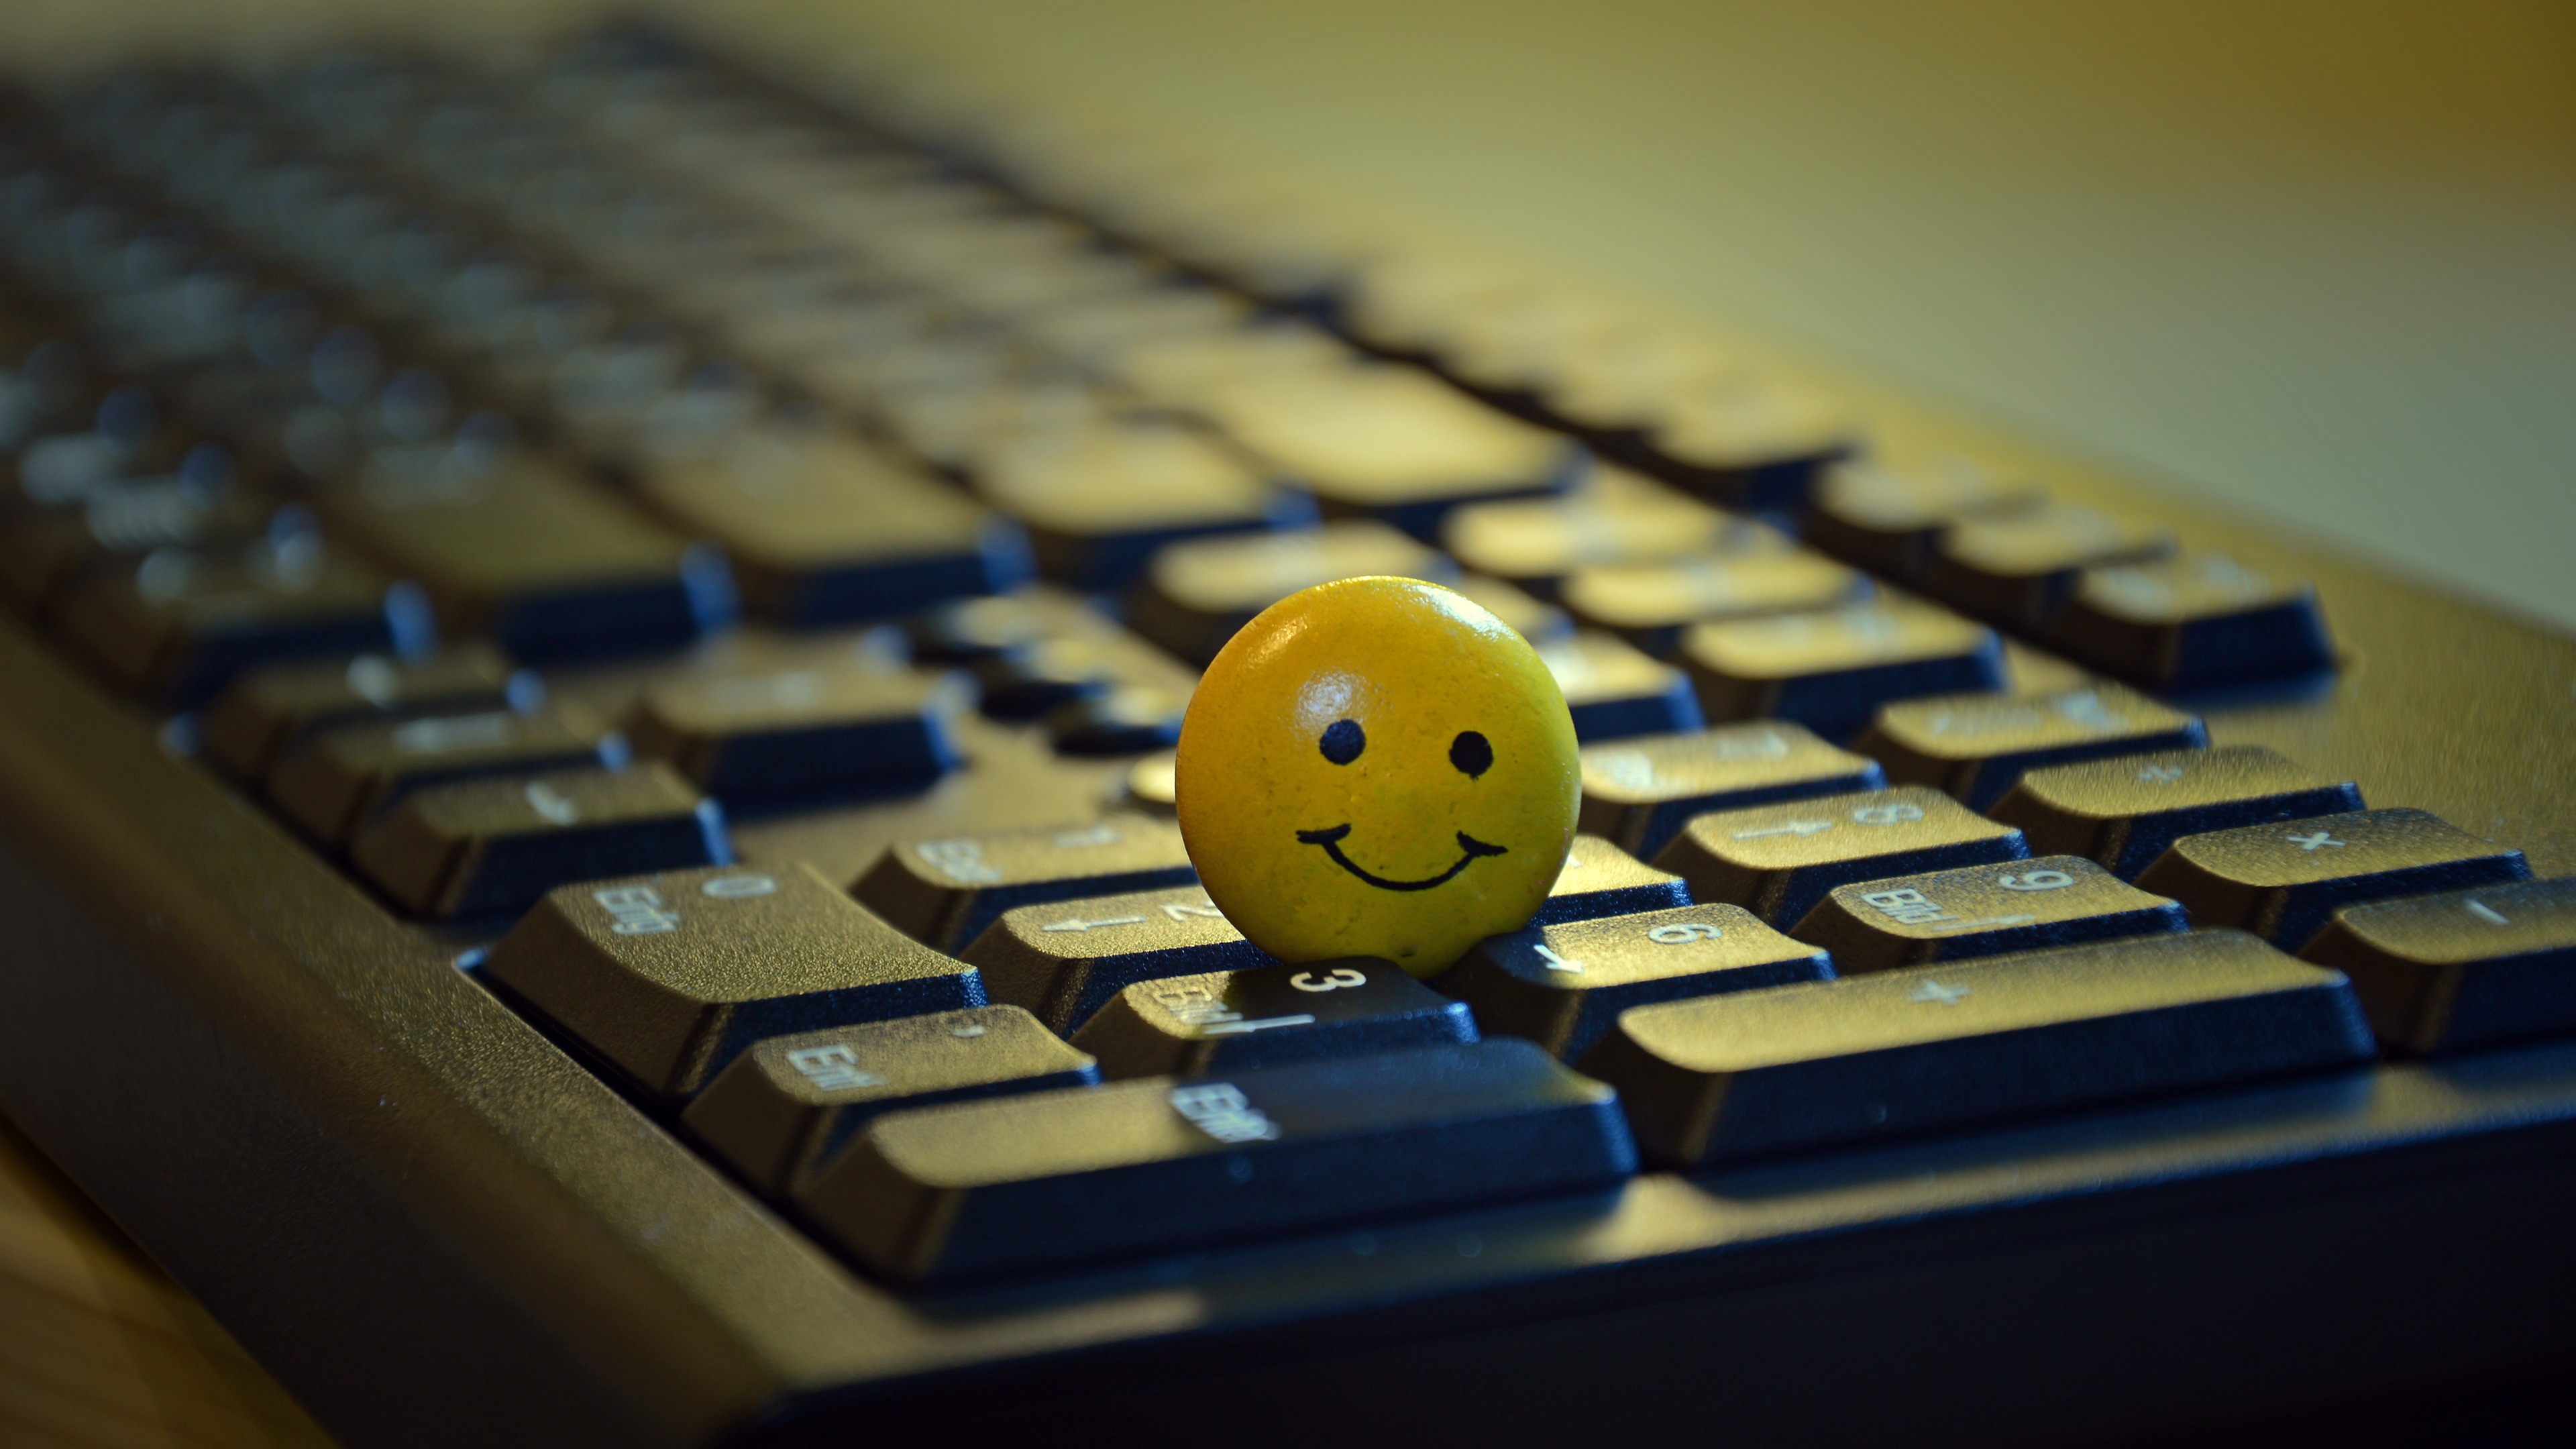 Wallpaper Smiley Ball Keyboard Toy 4k UHD